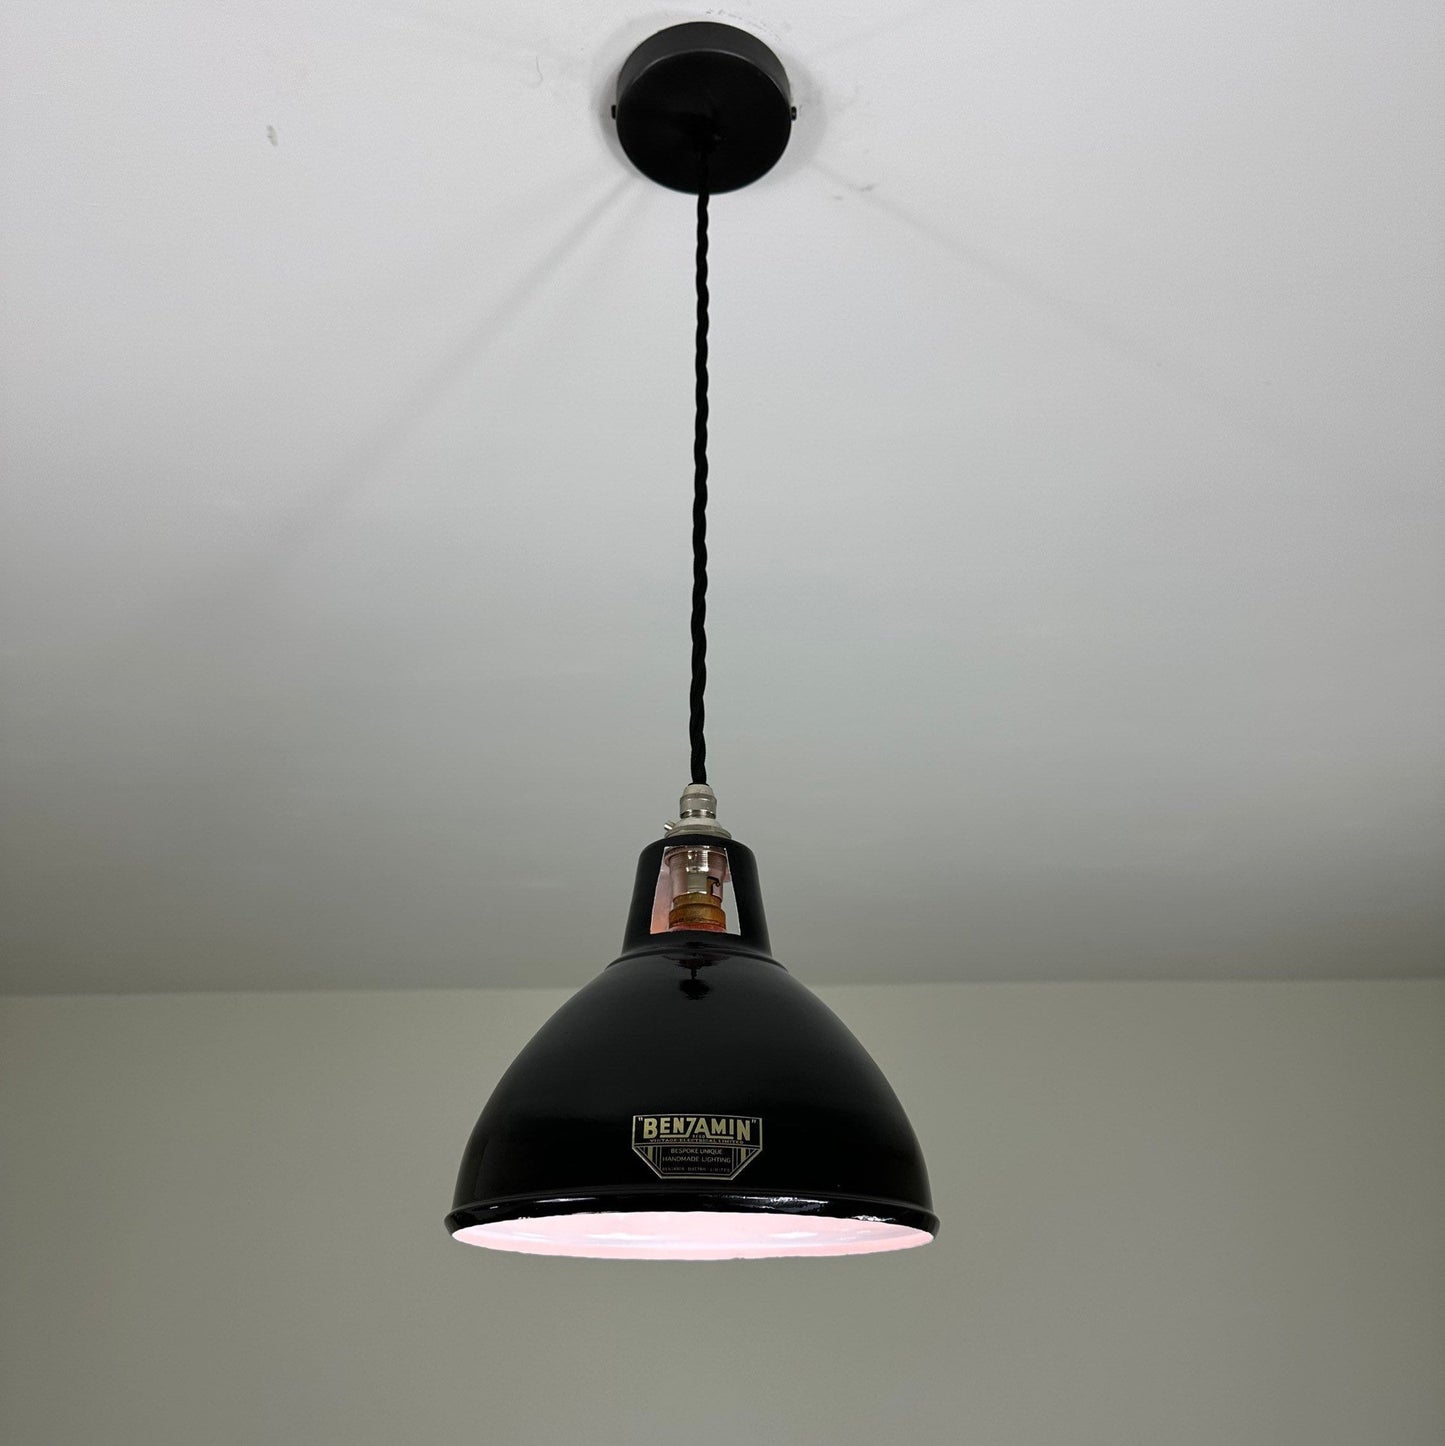 Shropham ~ Small Midnight Black Solid Shade Design Pendant Set Light | Ceiling Dining Room | Kitchen Table | Vintage Industrial | 8 Inch